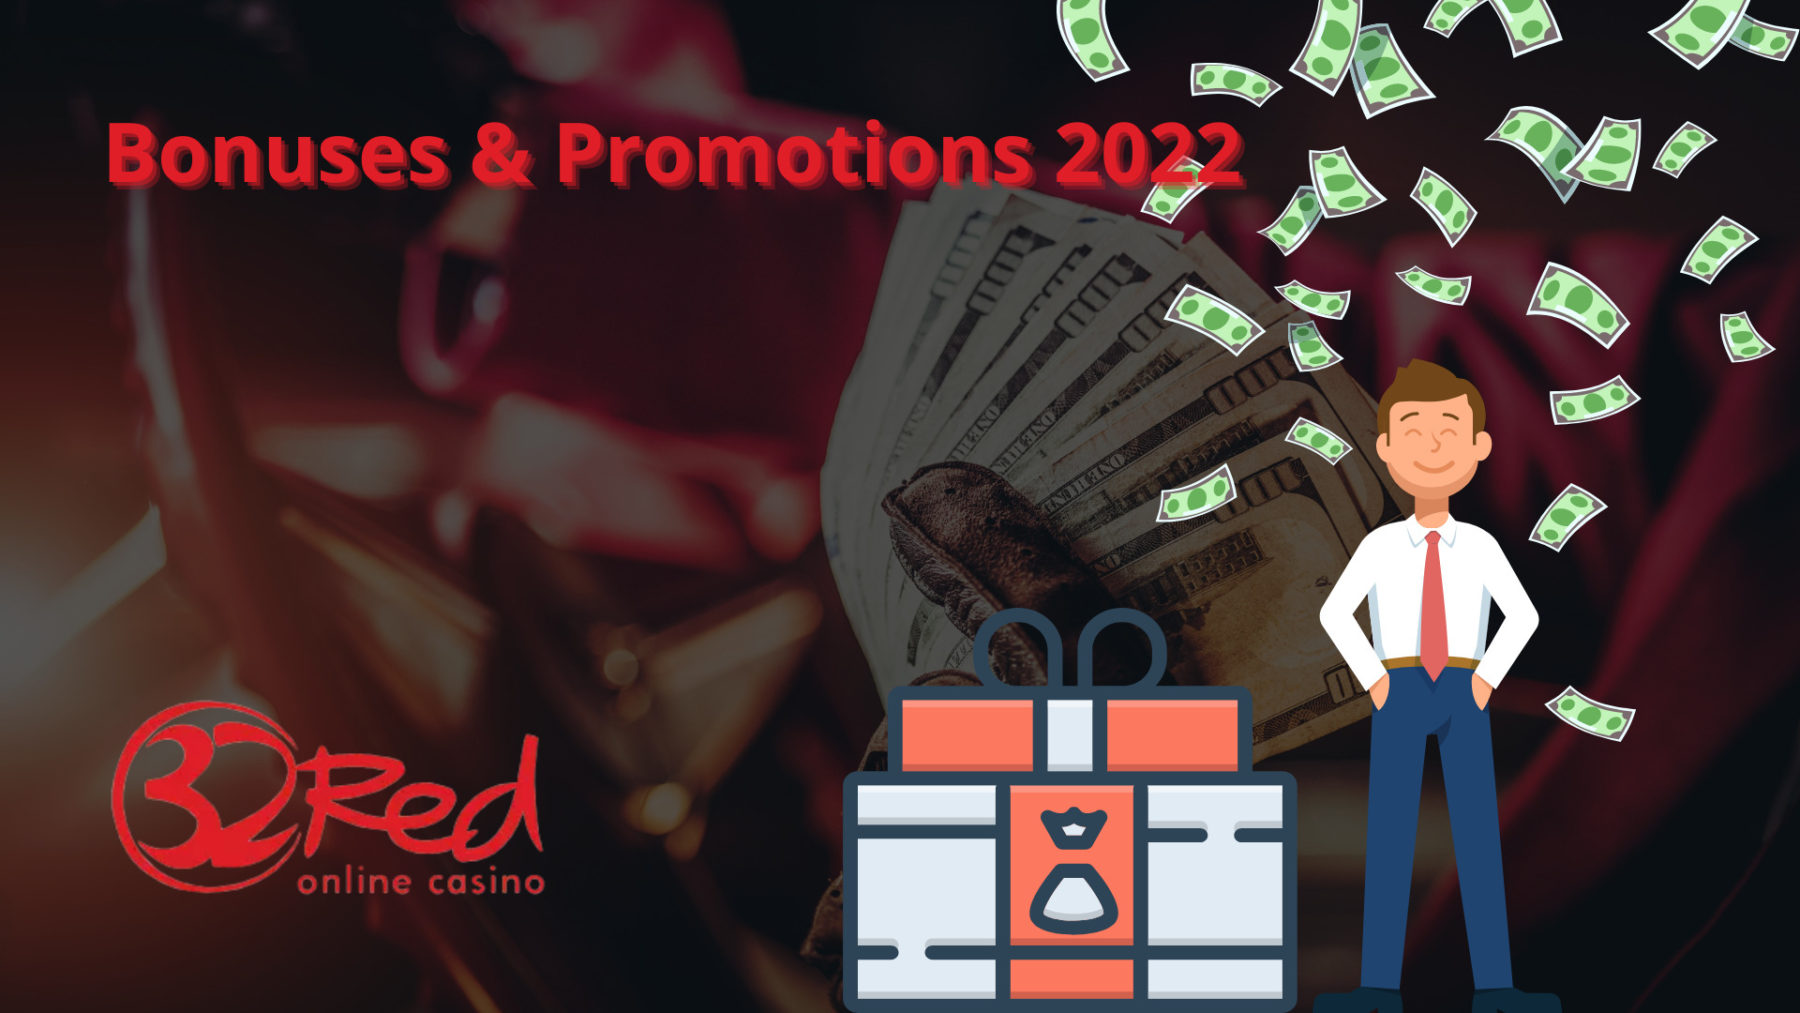 Bonuses &Amp; Promotions 2022 - 32Red Casino